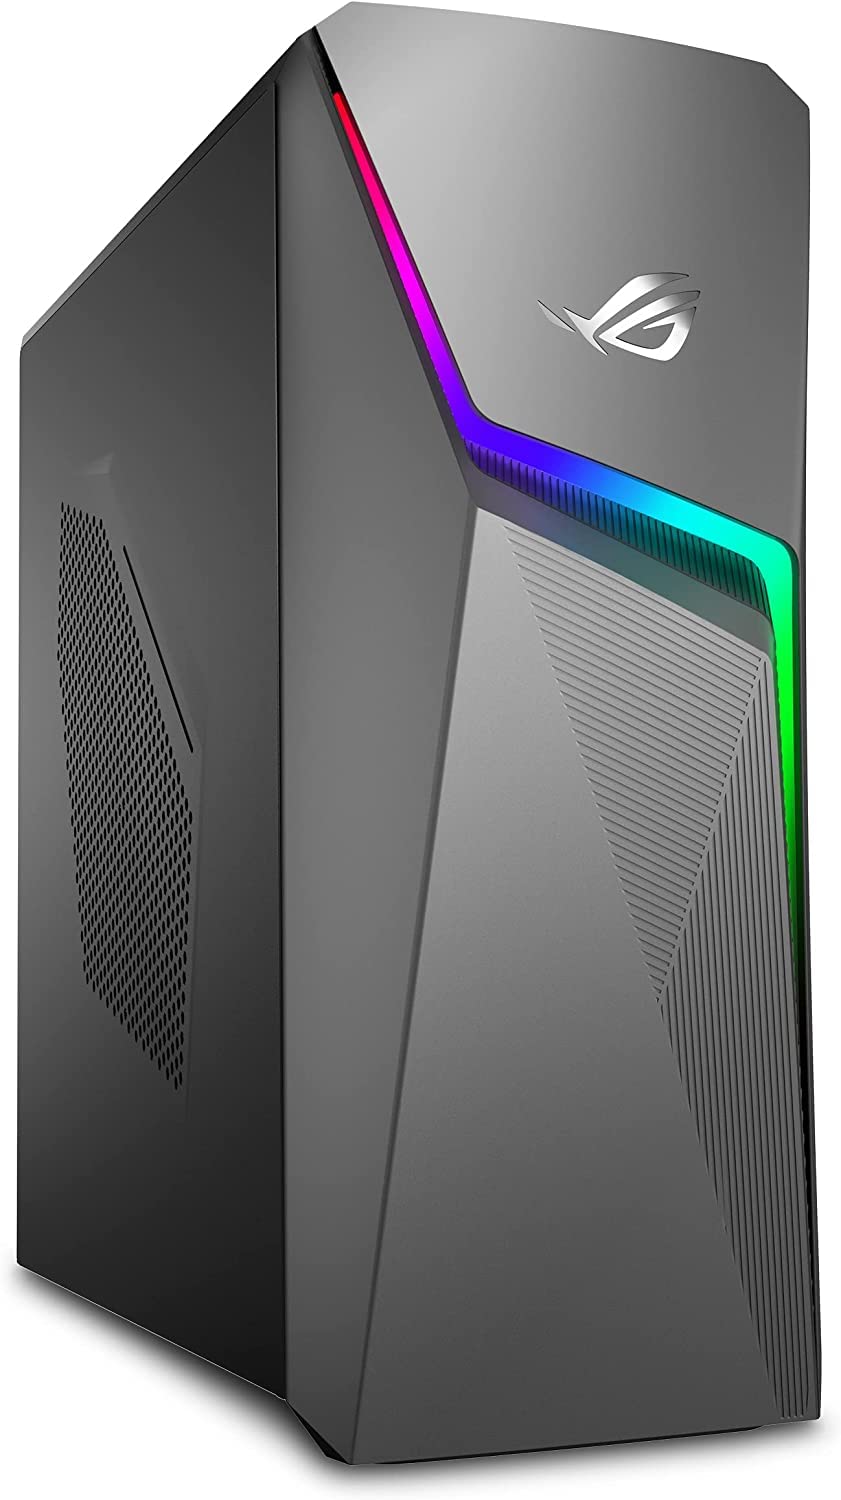 ASUS ROG Strix G10 Premium Gaming Desktop | 11th Generation Intel Core i5-11400F | 32GB RAM | 1TB SSD | NVIDIA GeForce RTX 3060 | Gray | Windows 11 | with Mouse Pad Bundle